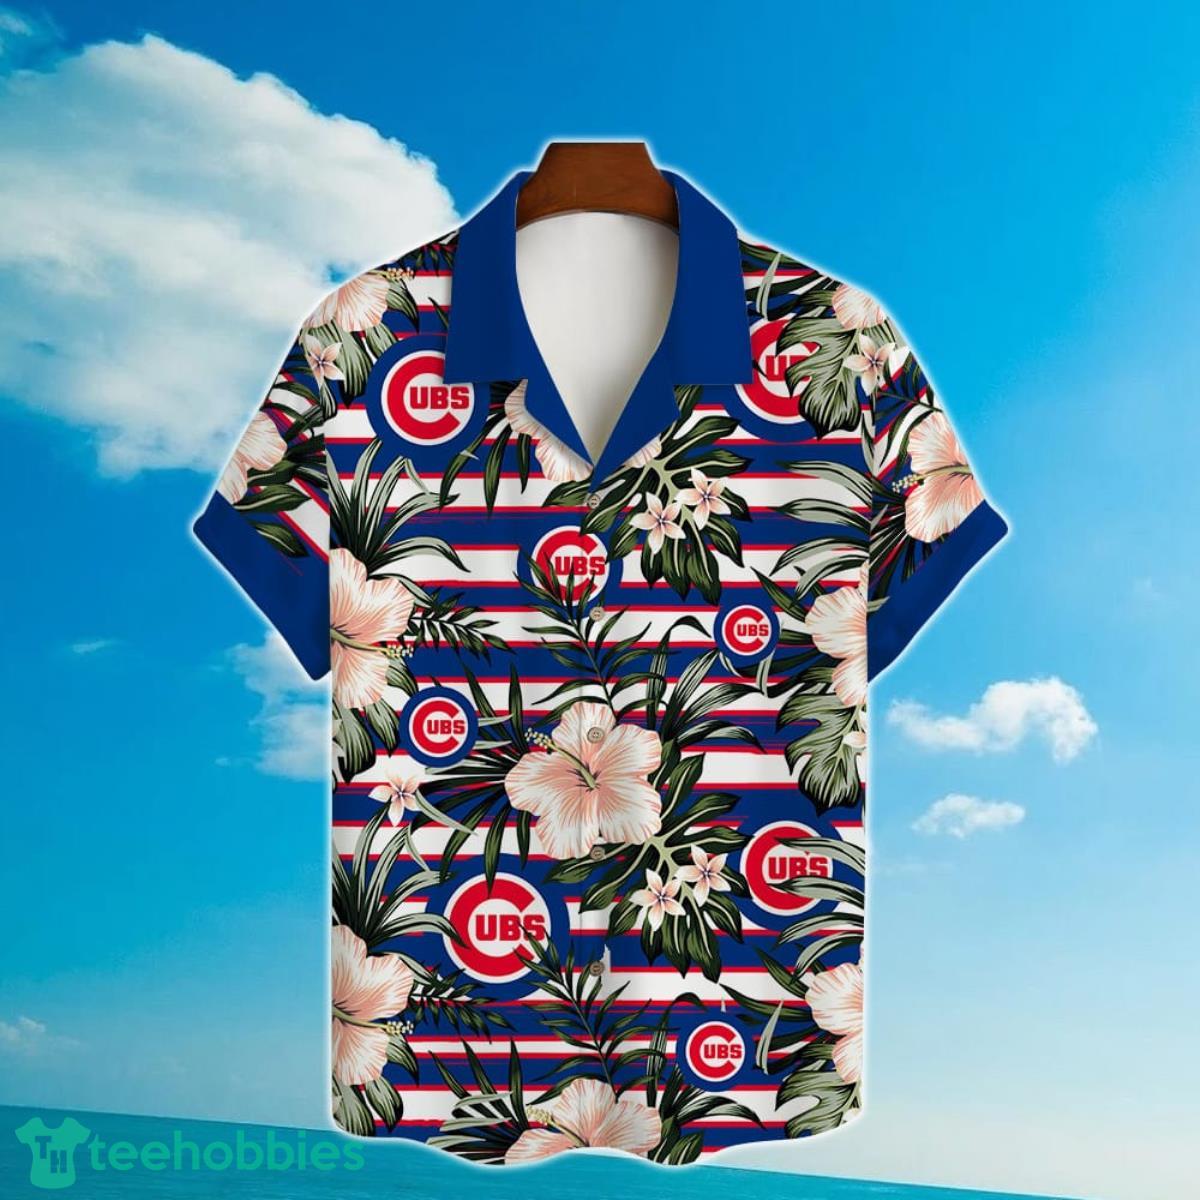 Chicago Cubs Baseball - 2023 Season Shirt